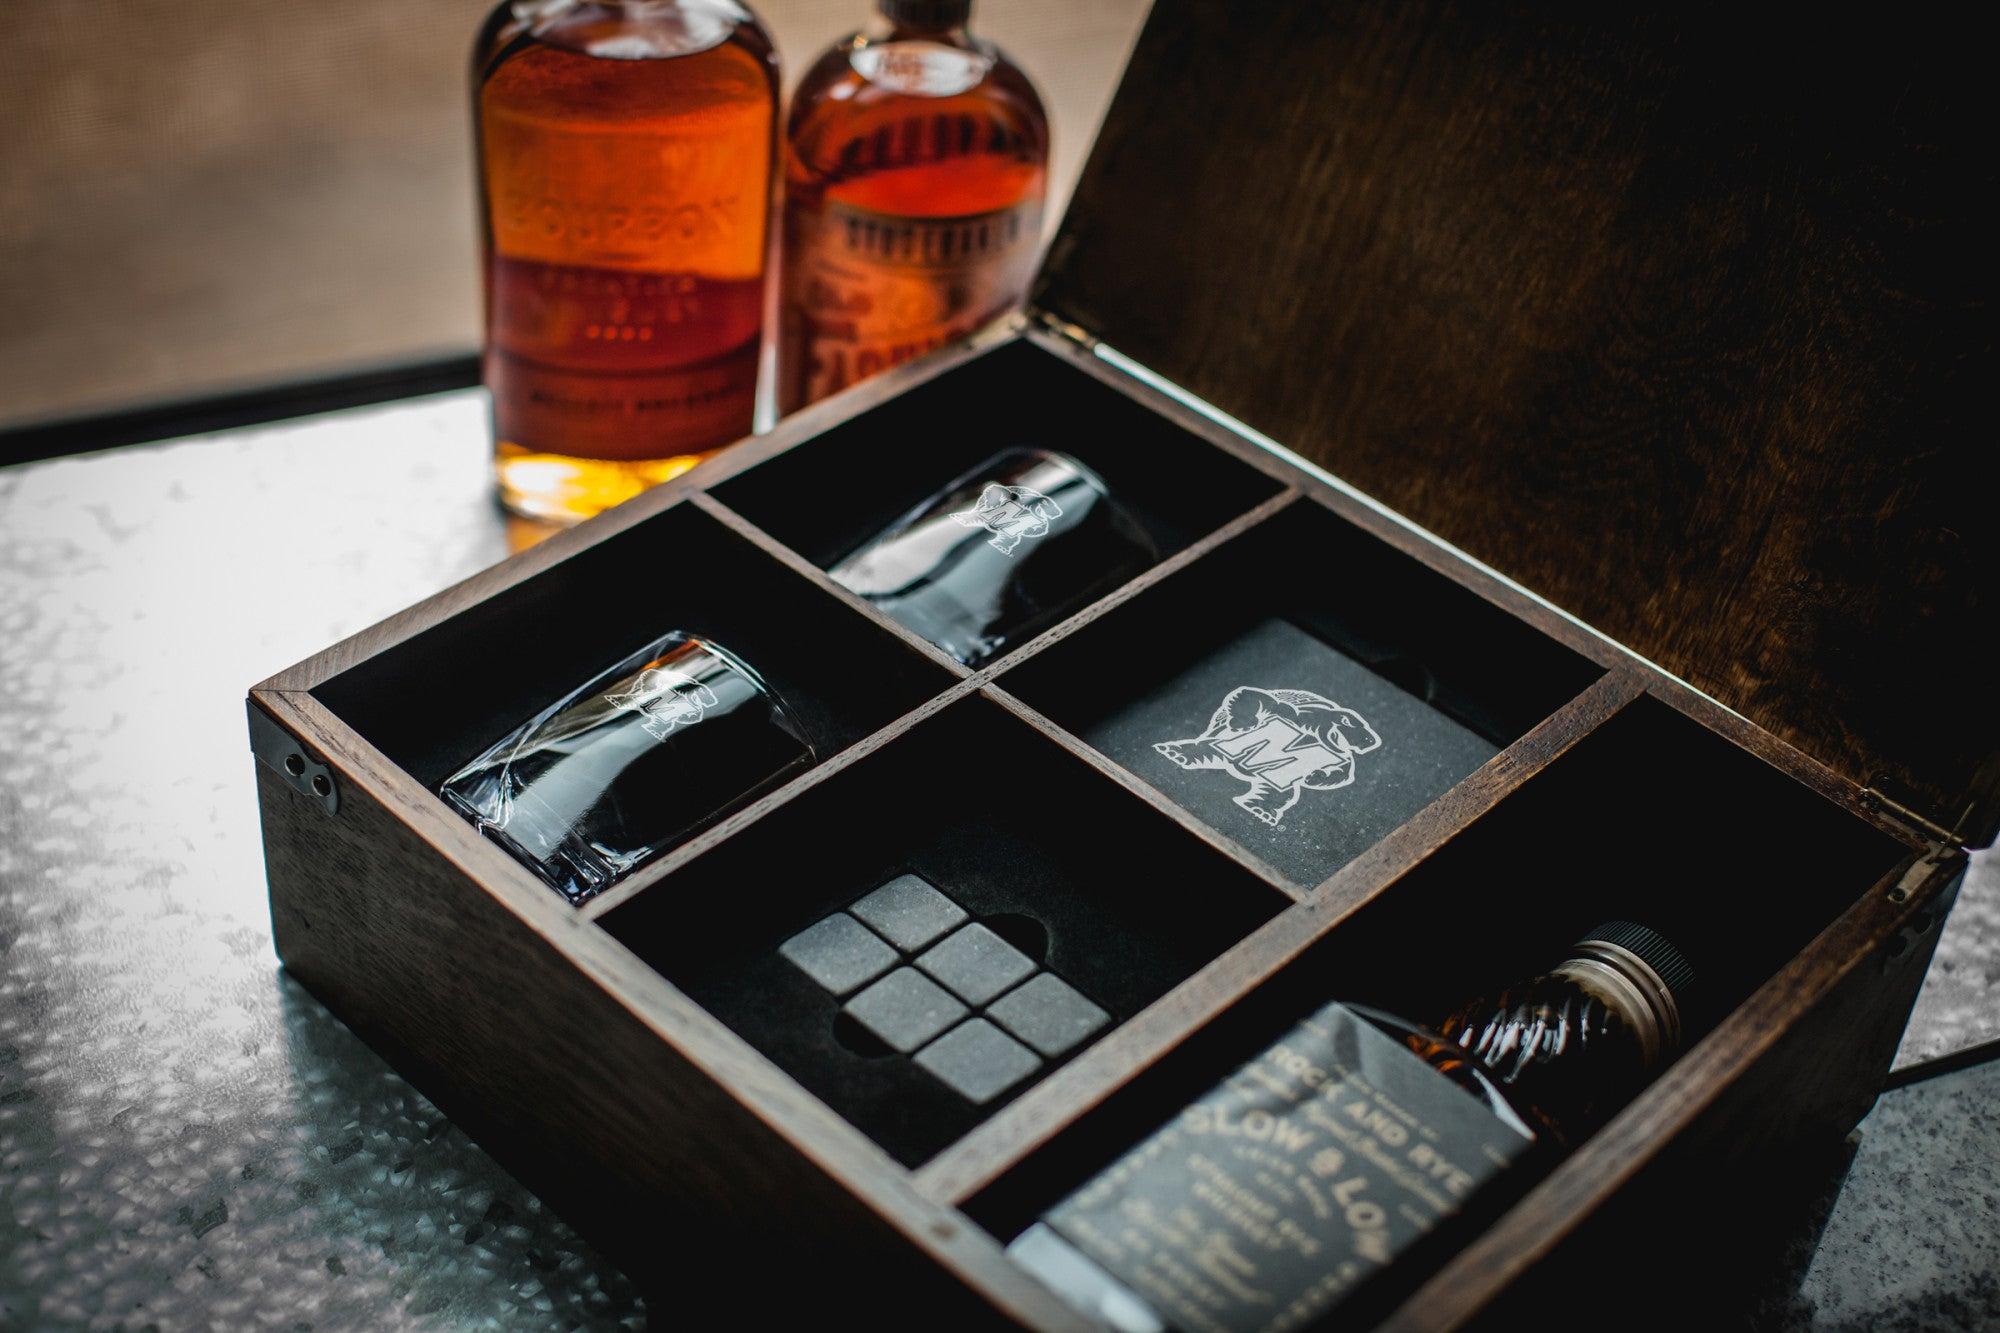 Maryland Terrapins - Whiskey Box Gift Set